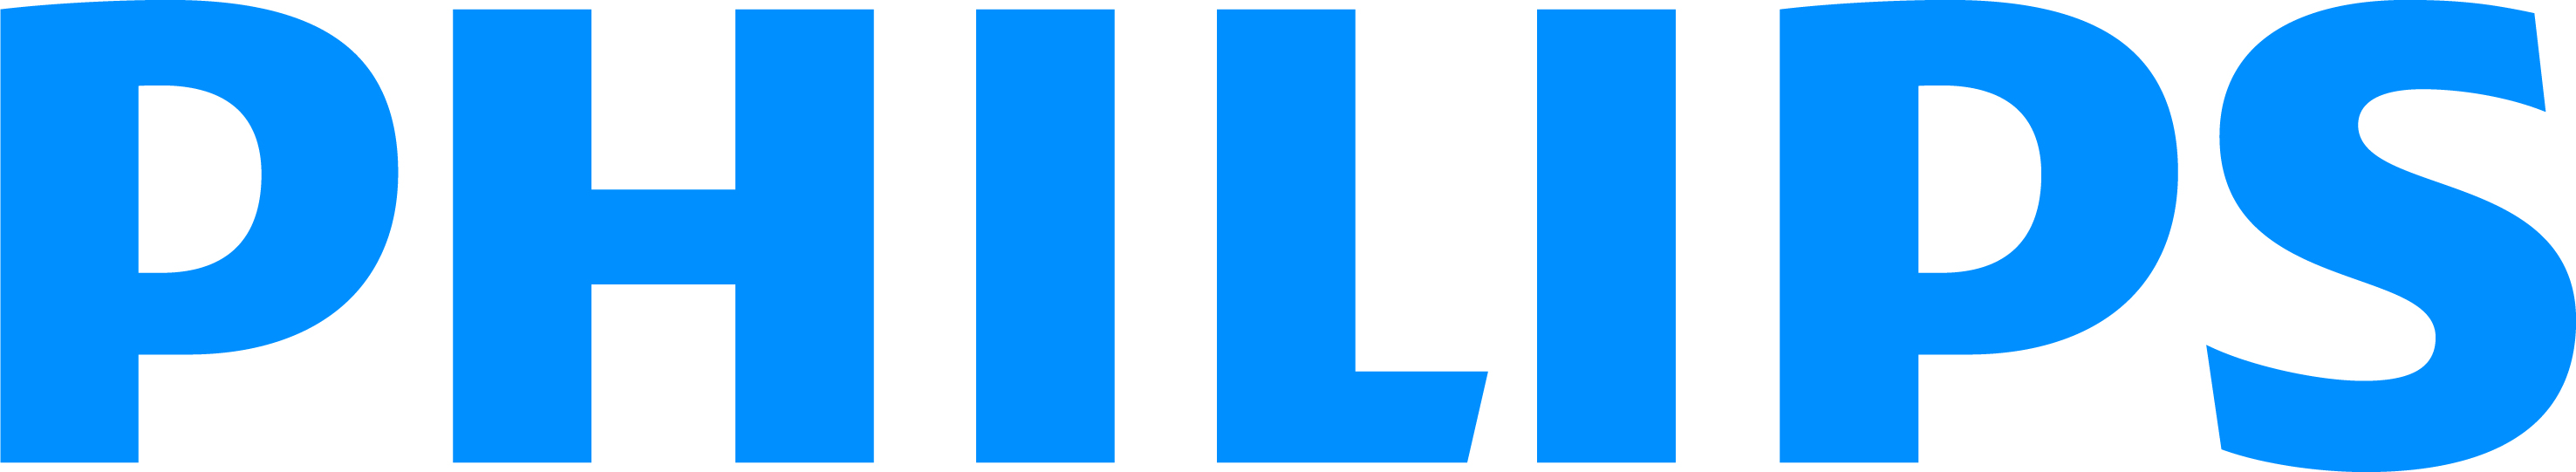 ER AUTOMOBILES  - logo Philips